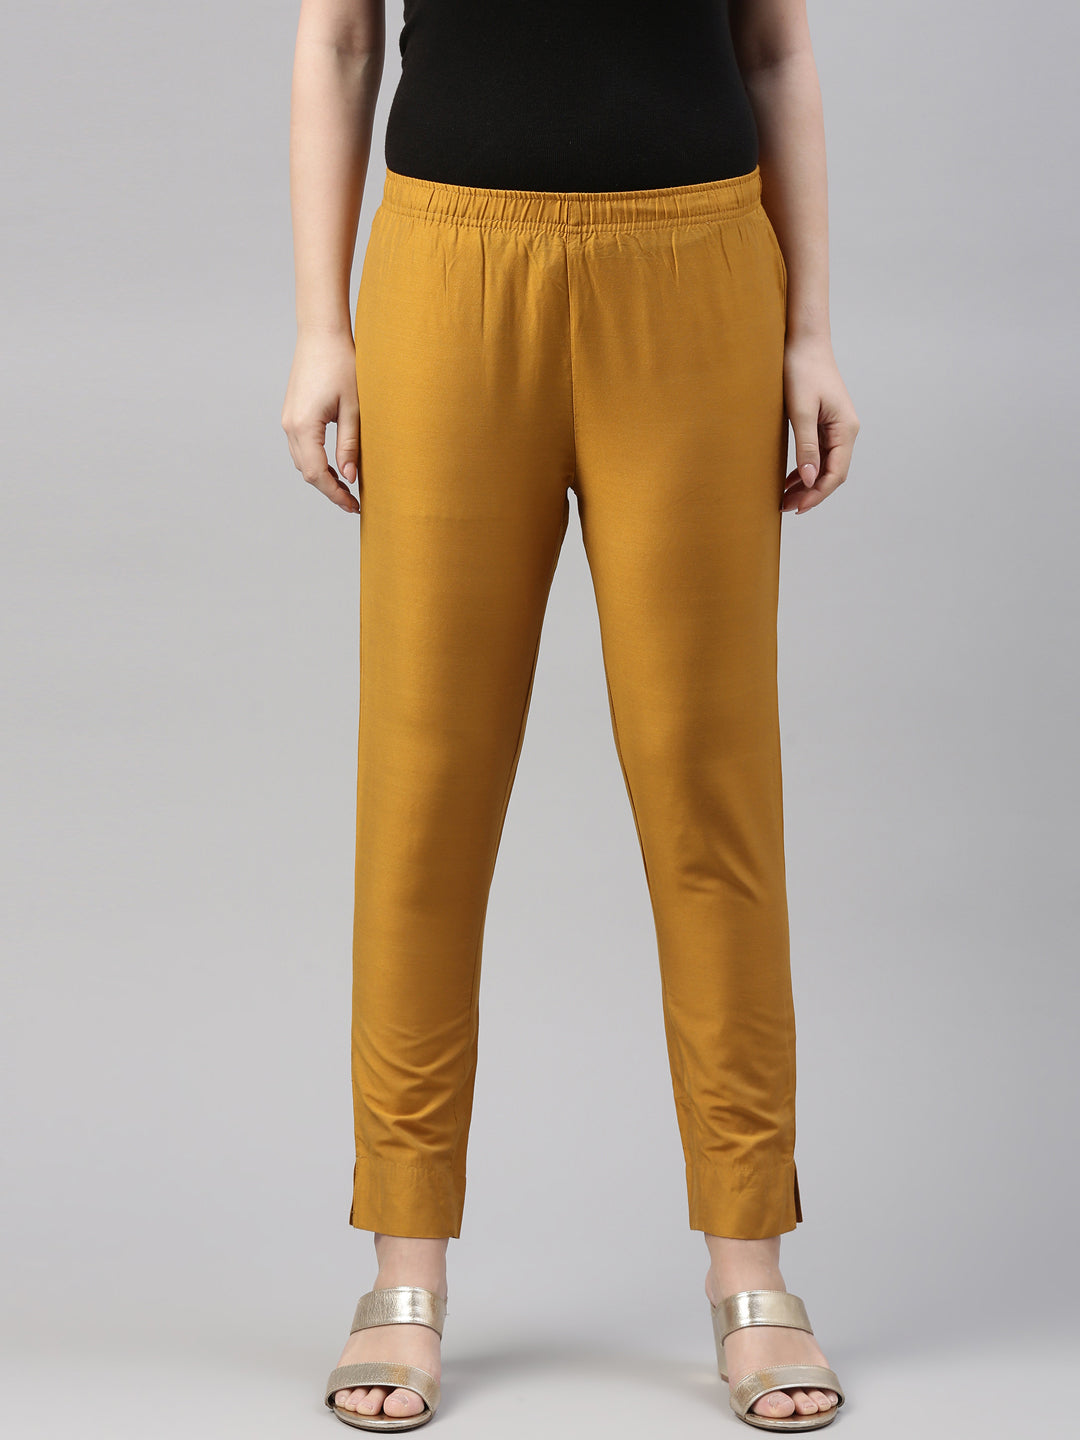 Buy Mustard Yellow Pants for Women by Molcha Online | Ajio.com